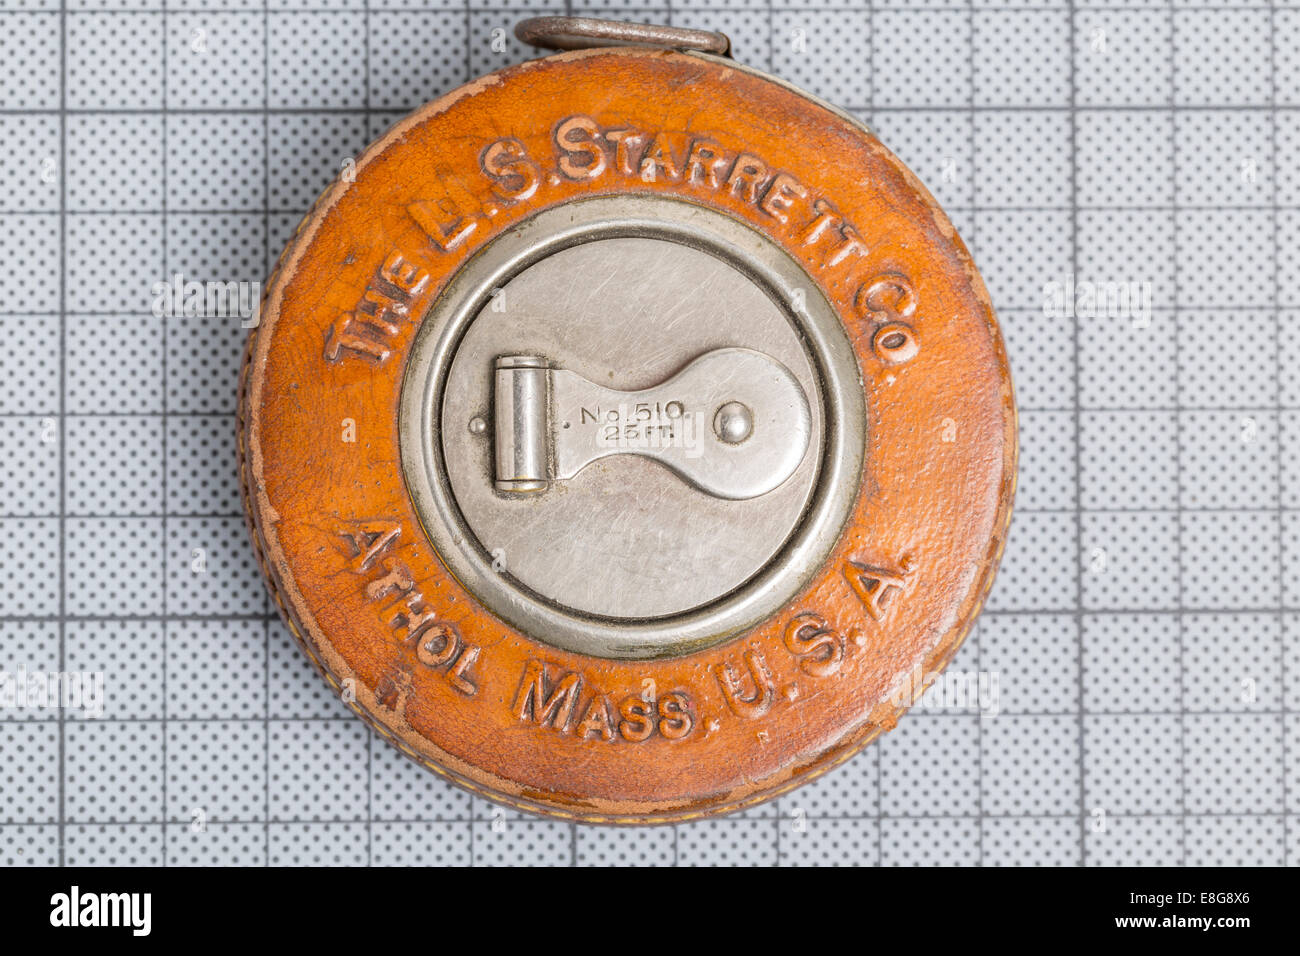 Surveyor's tape measure or rule made by L. S. Starrett, Athol, Massachusetts, U.S.A. Stock Photo